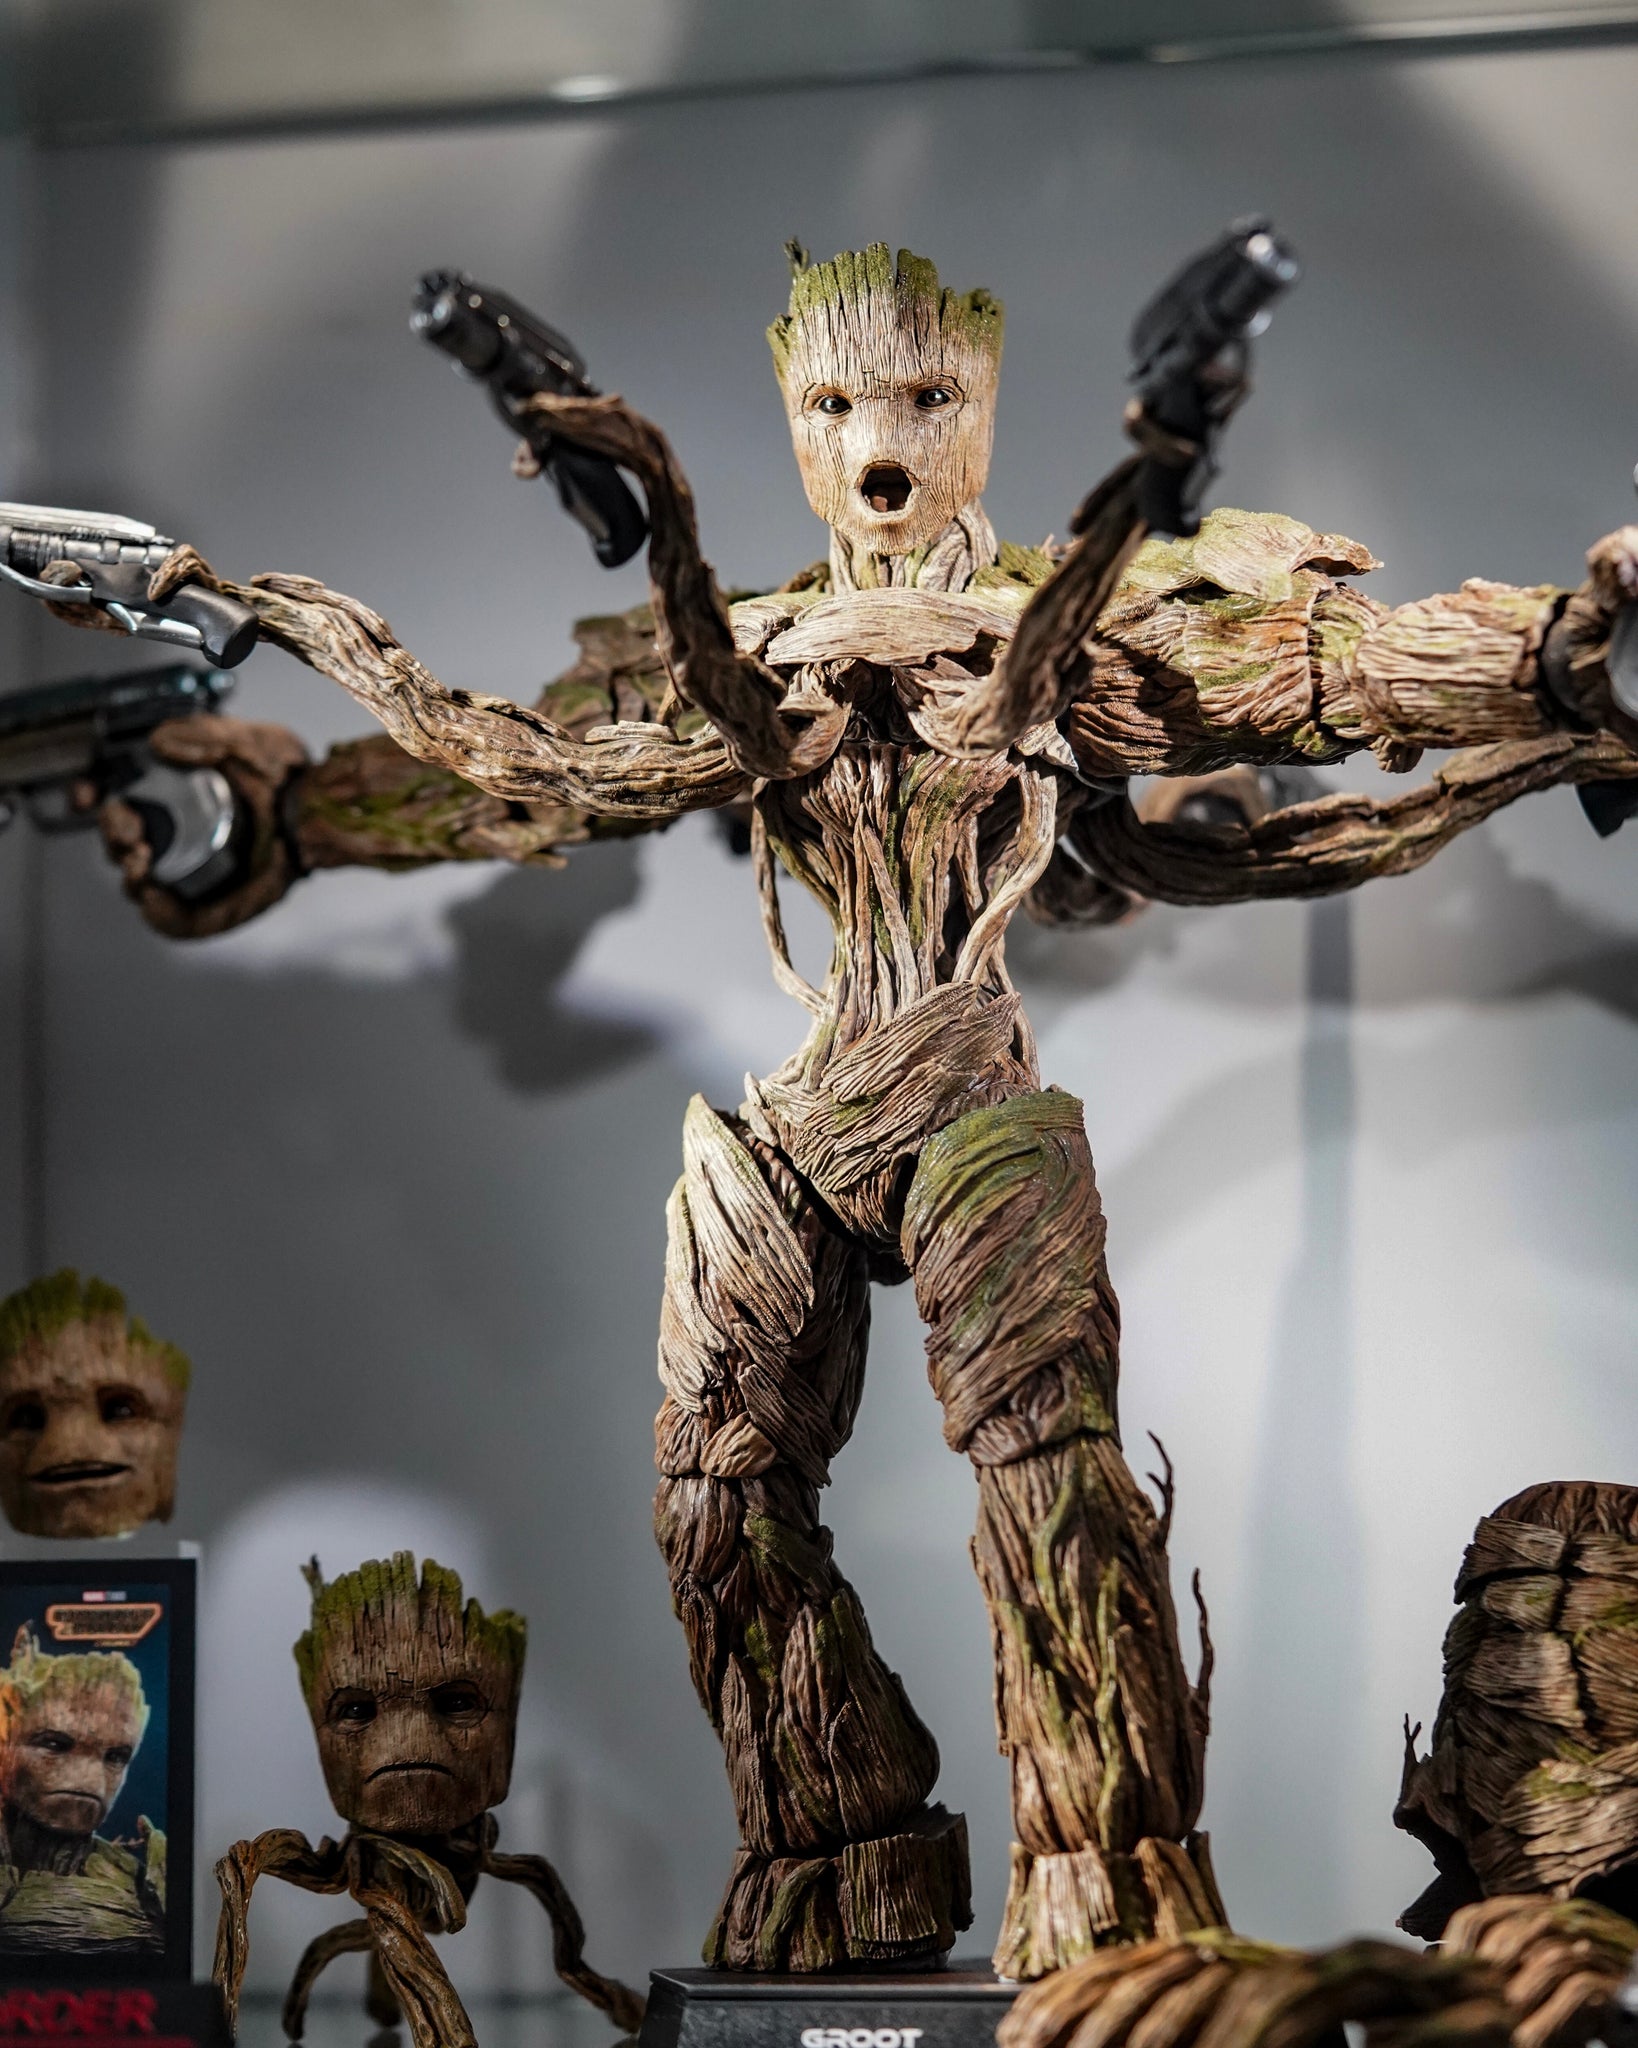 Guardians of the Galaxy Vol. 3 Marvel Legends Groot Deluxe Figure